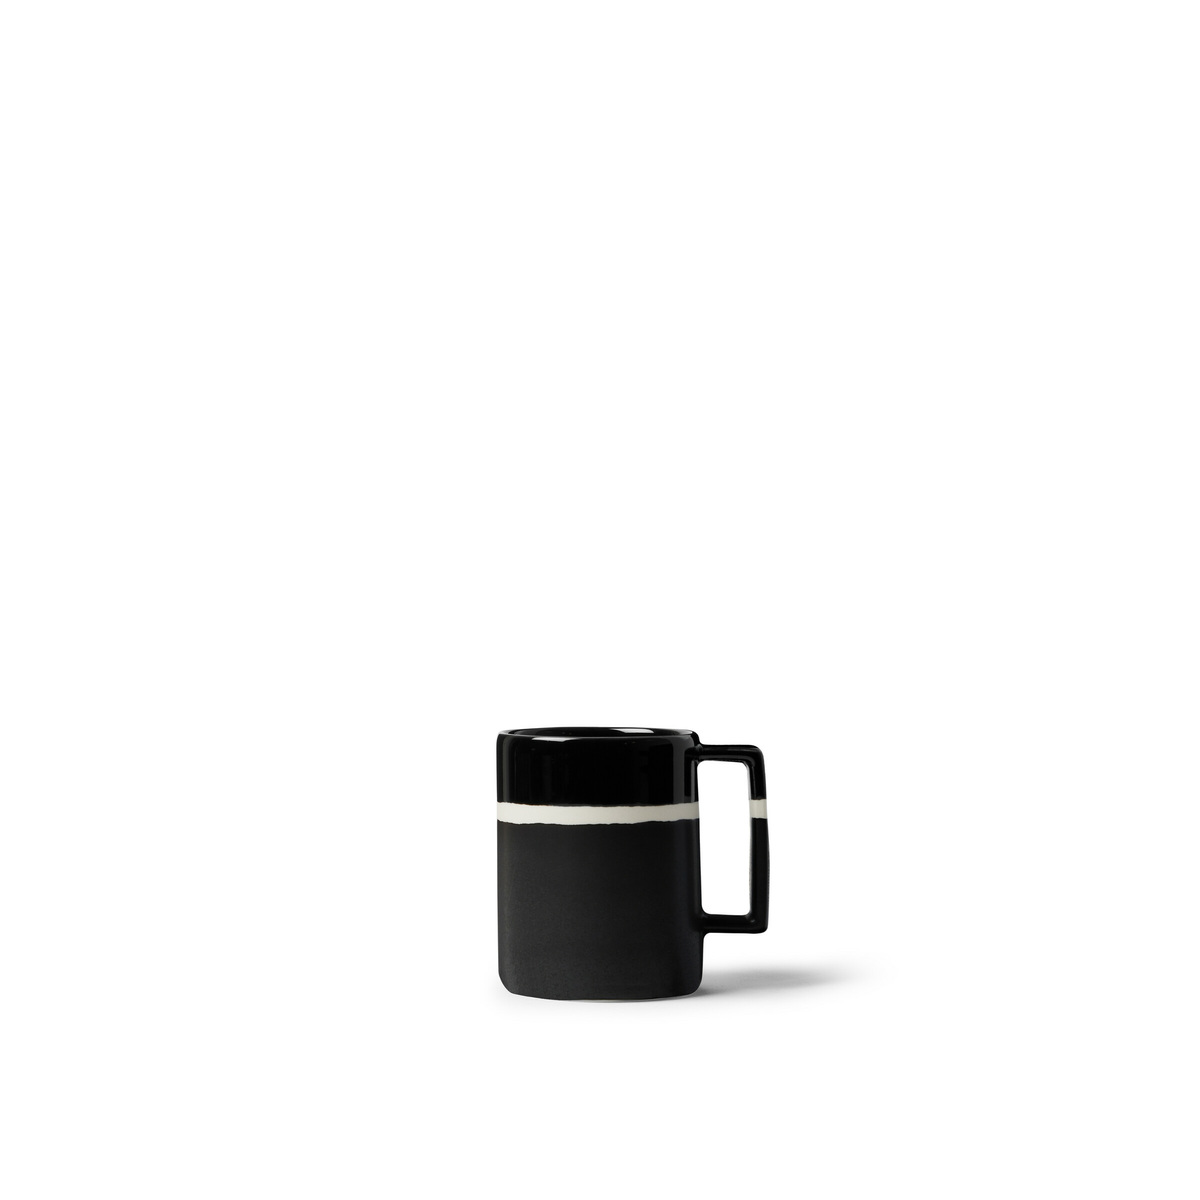 Mug Sicilia, Black Radish - H10 cm x ⌀7,5 - Ceramic - image 1